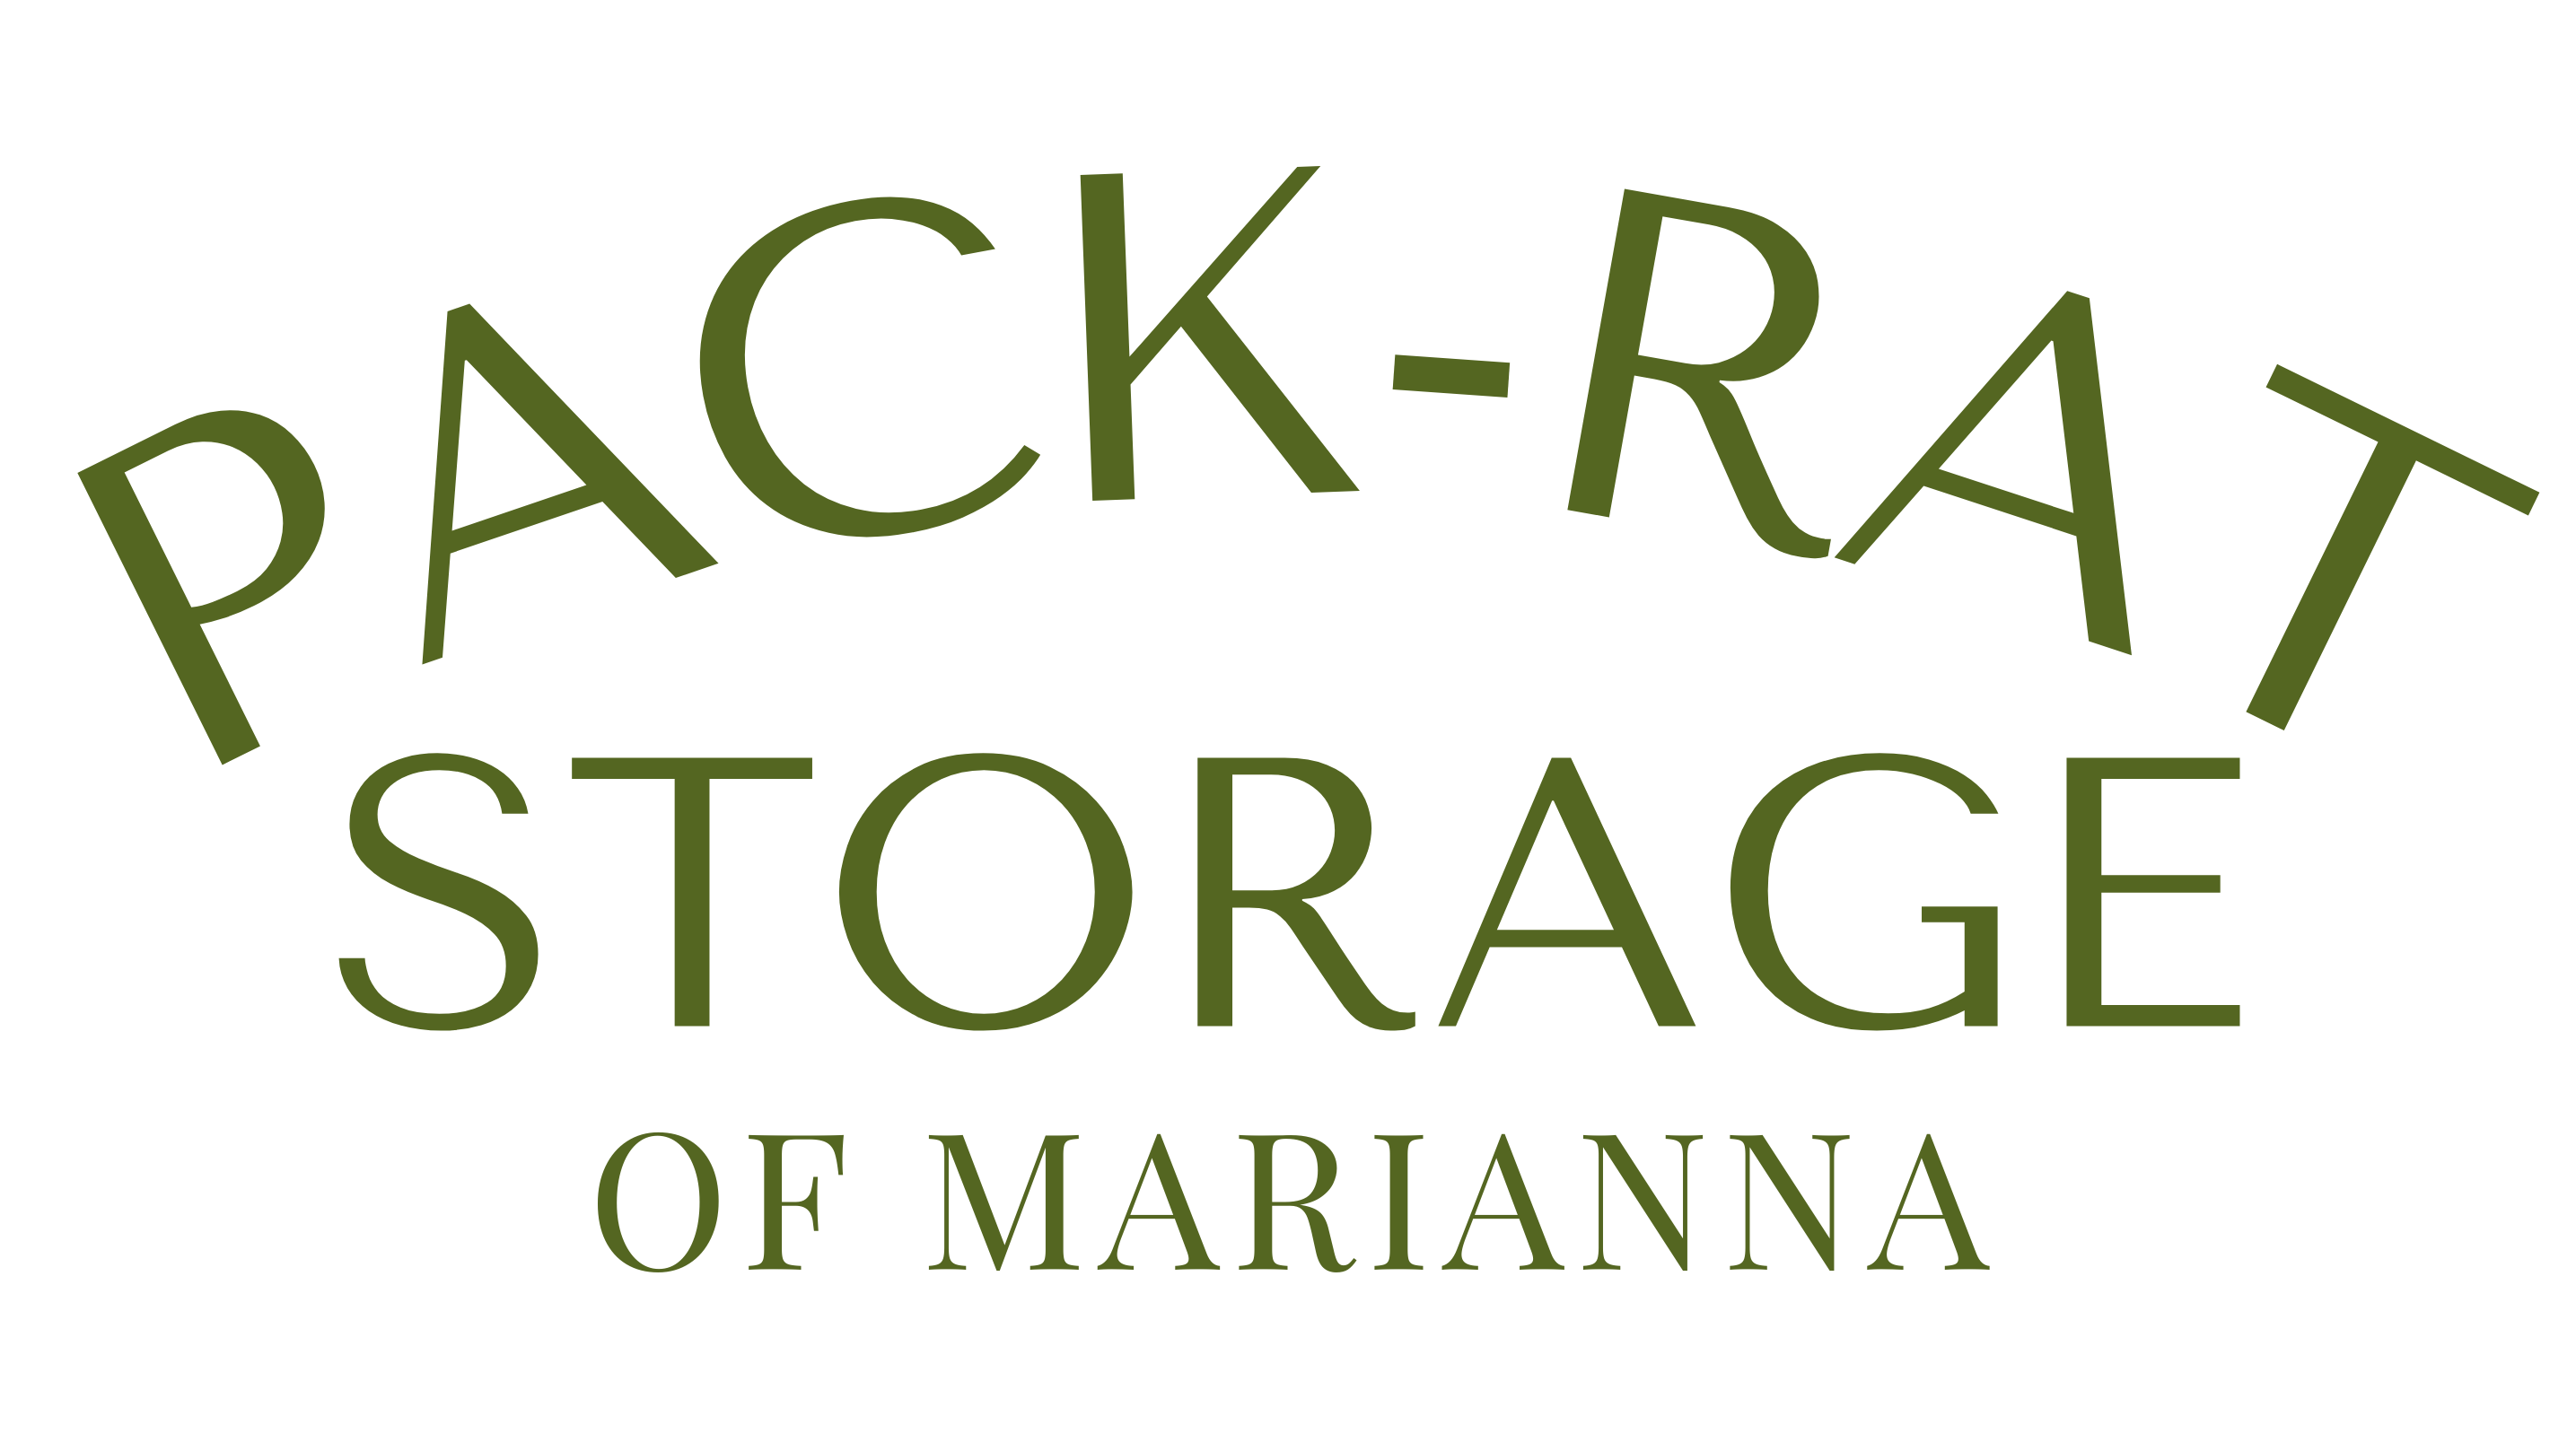 Pack - Rat Storage of Marianna Logo